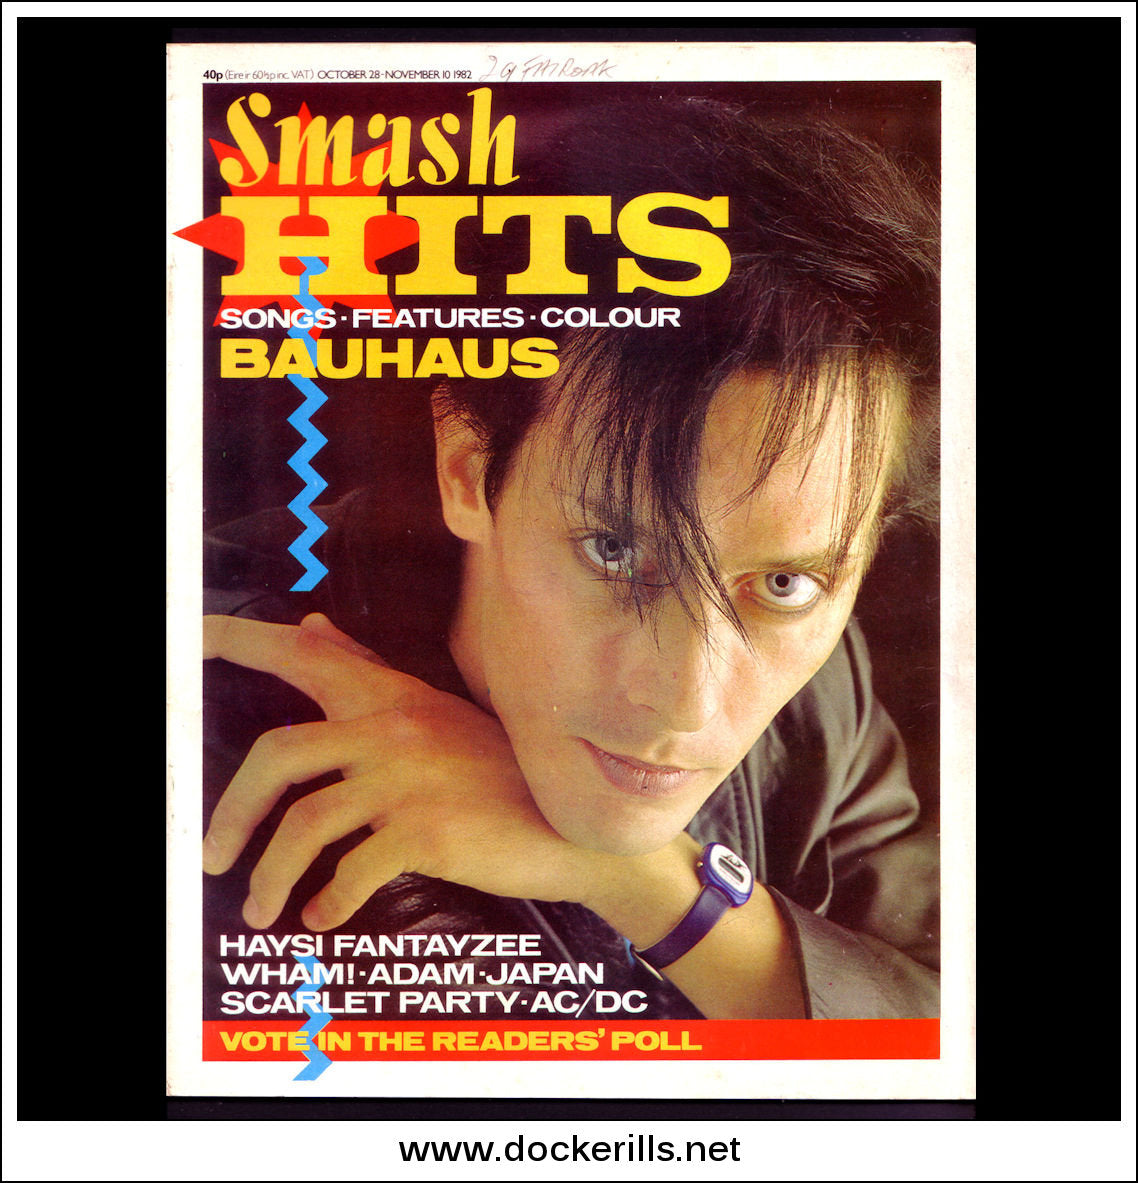 Smash Hits Magazine, October 28 - November 10, 1982. Vol. 4, No. 22.